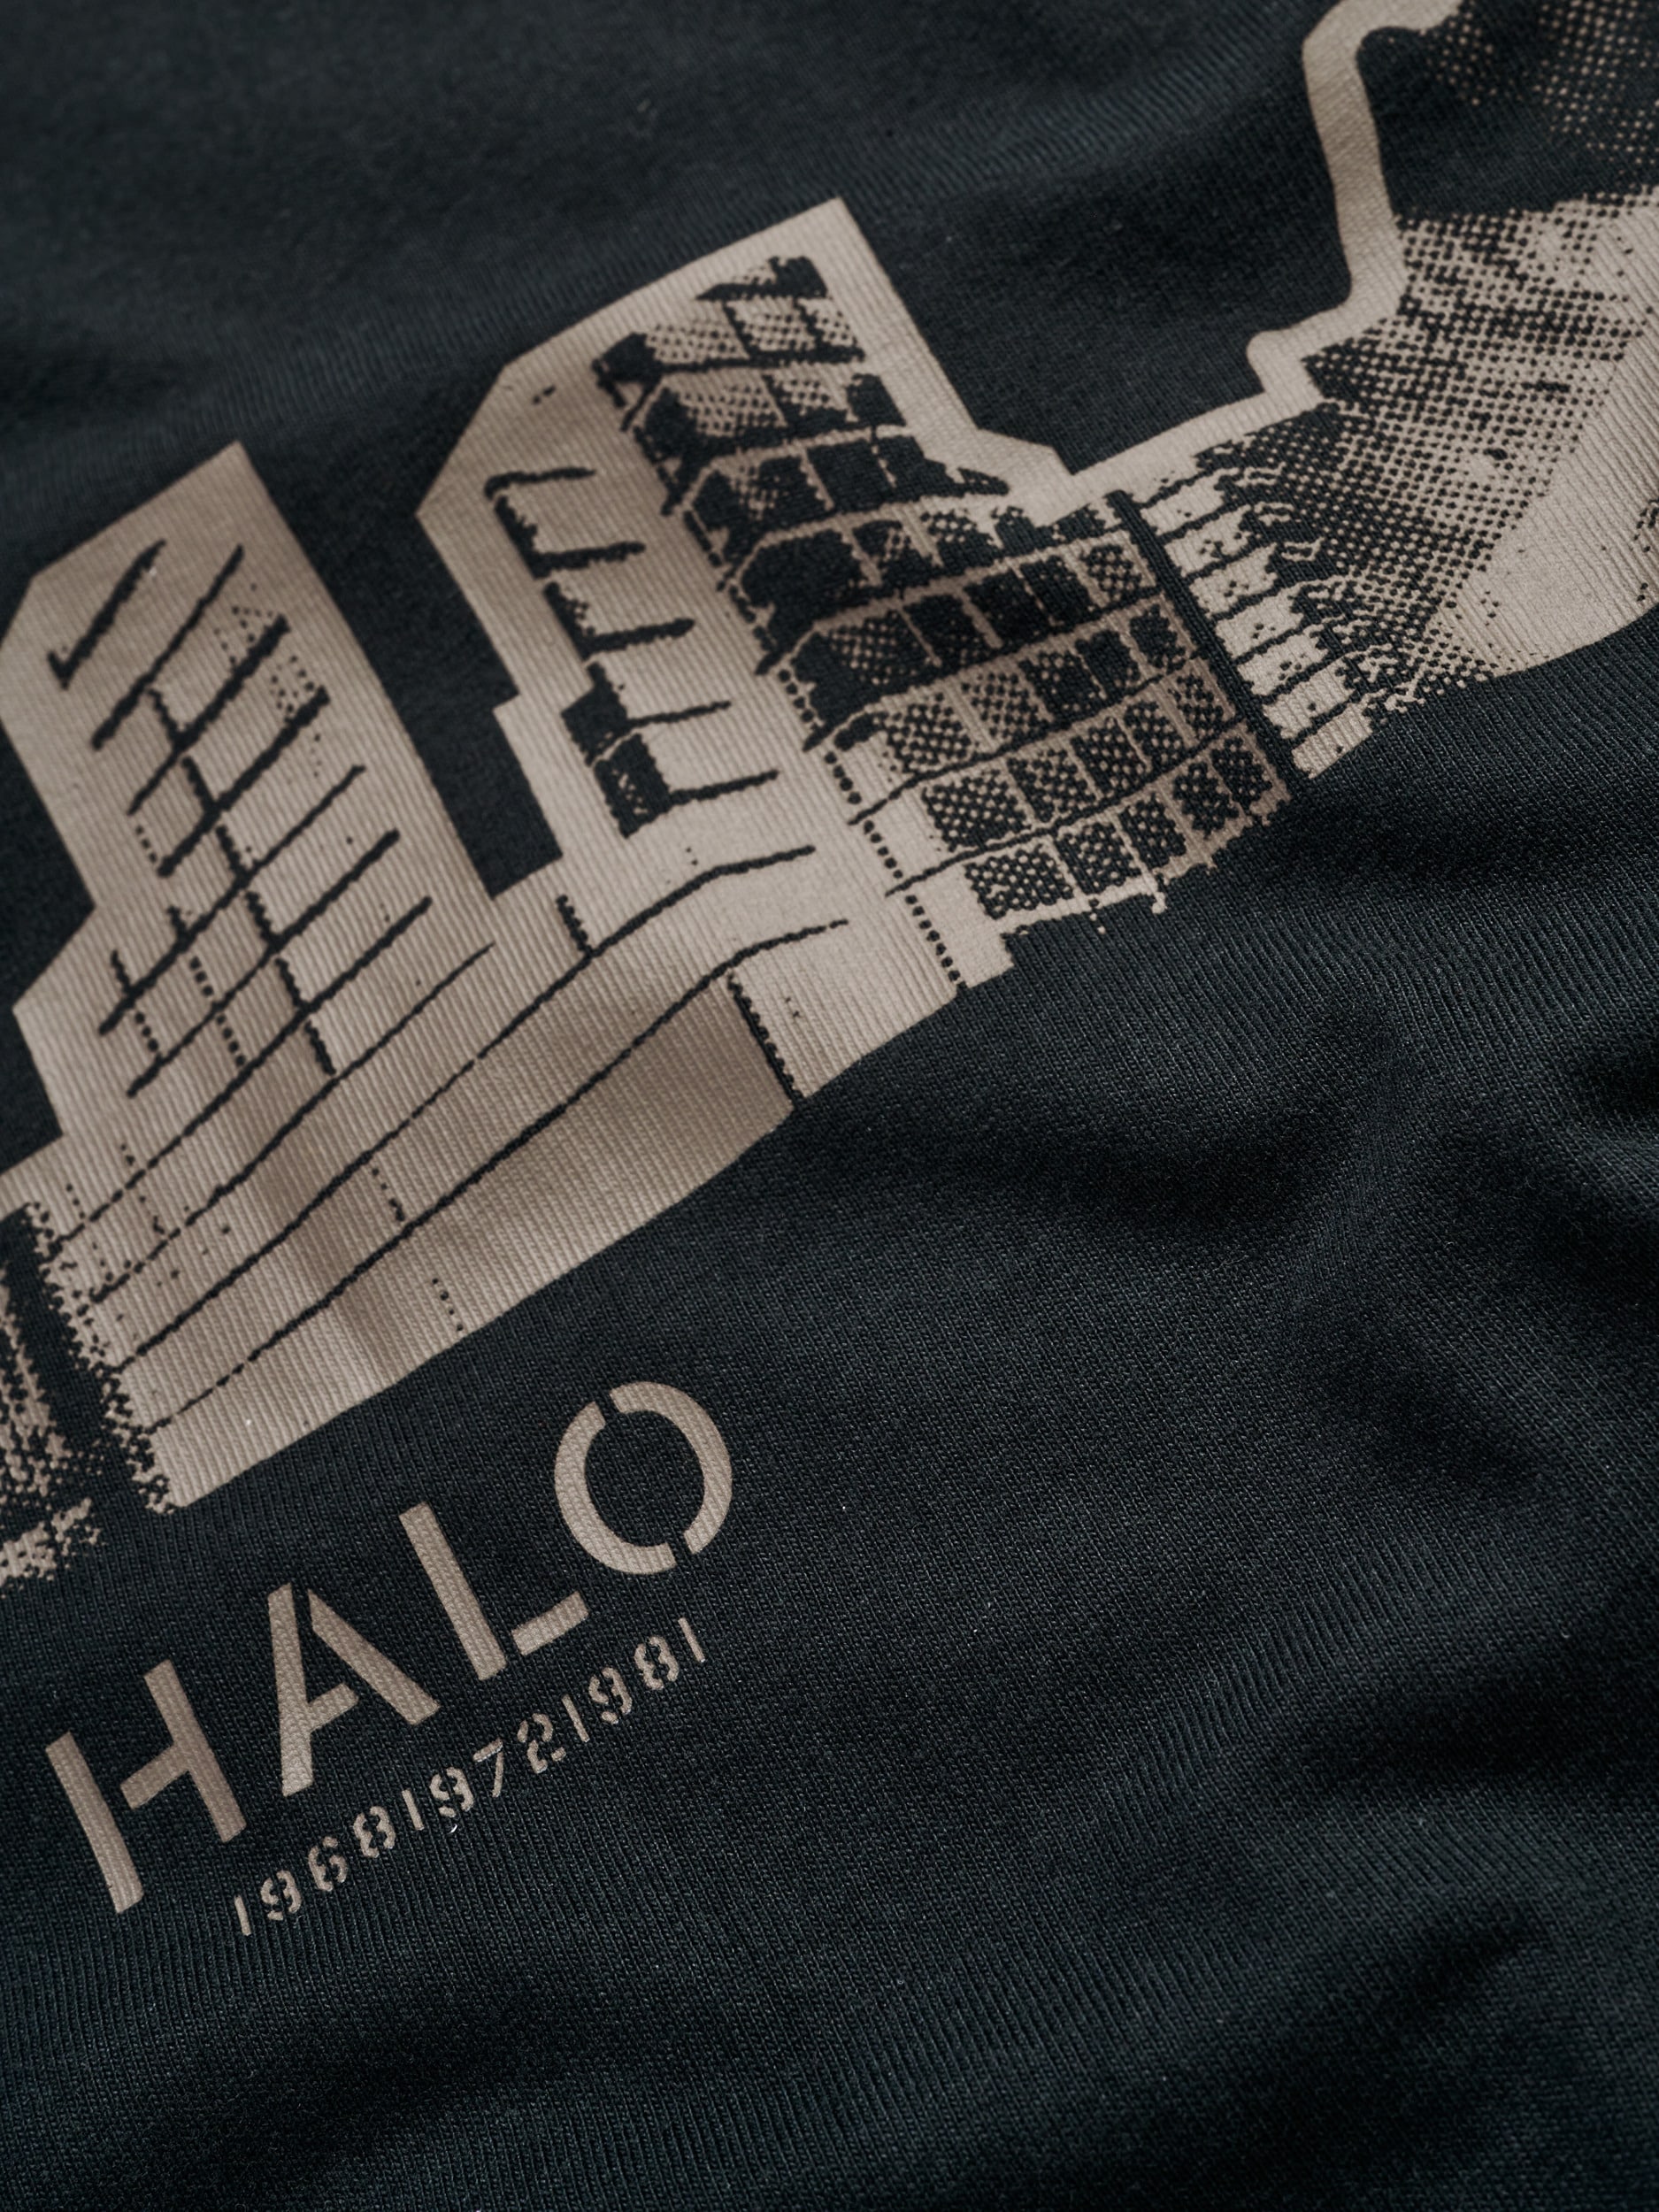 HALO Off Duty T-Shirt - Black Details